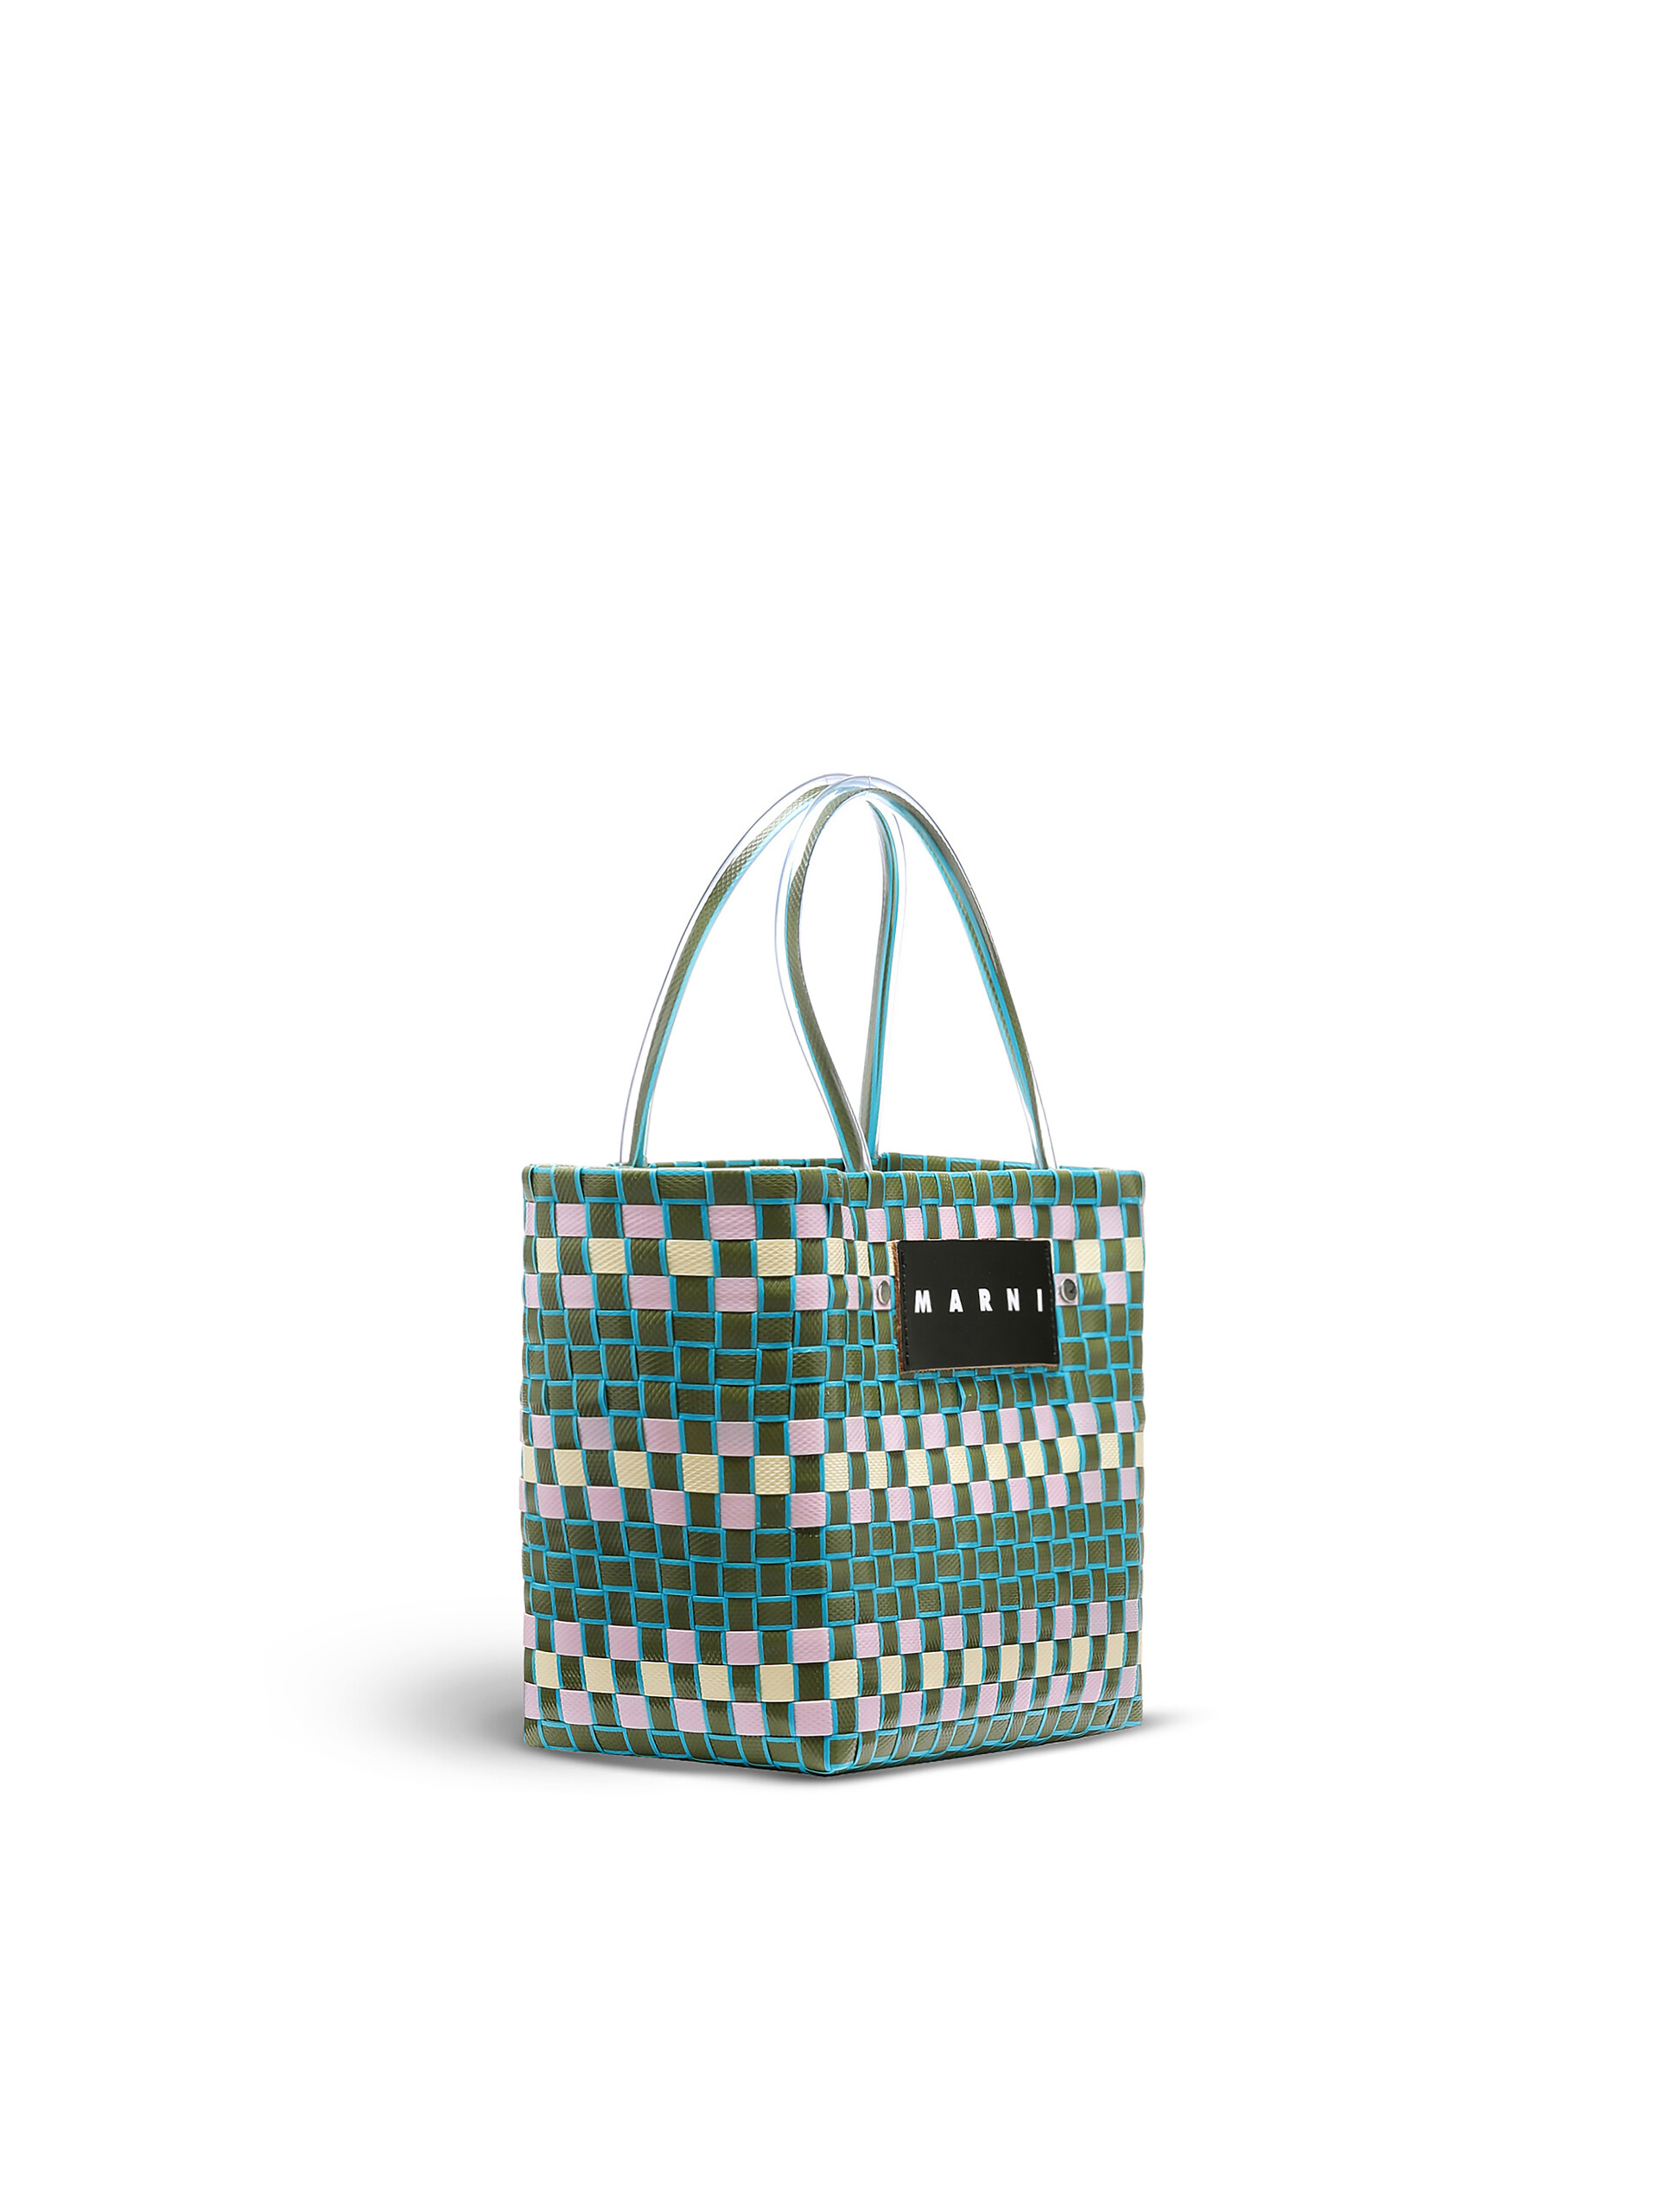 MARNI MARKET shopping bag in green polypropylene - Bags - Image 2